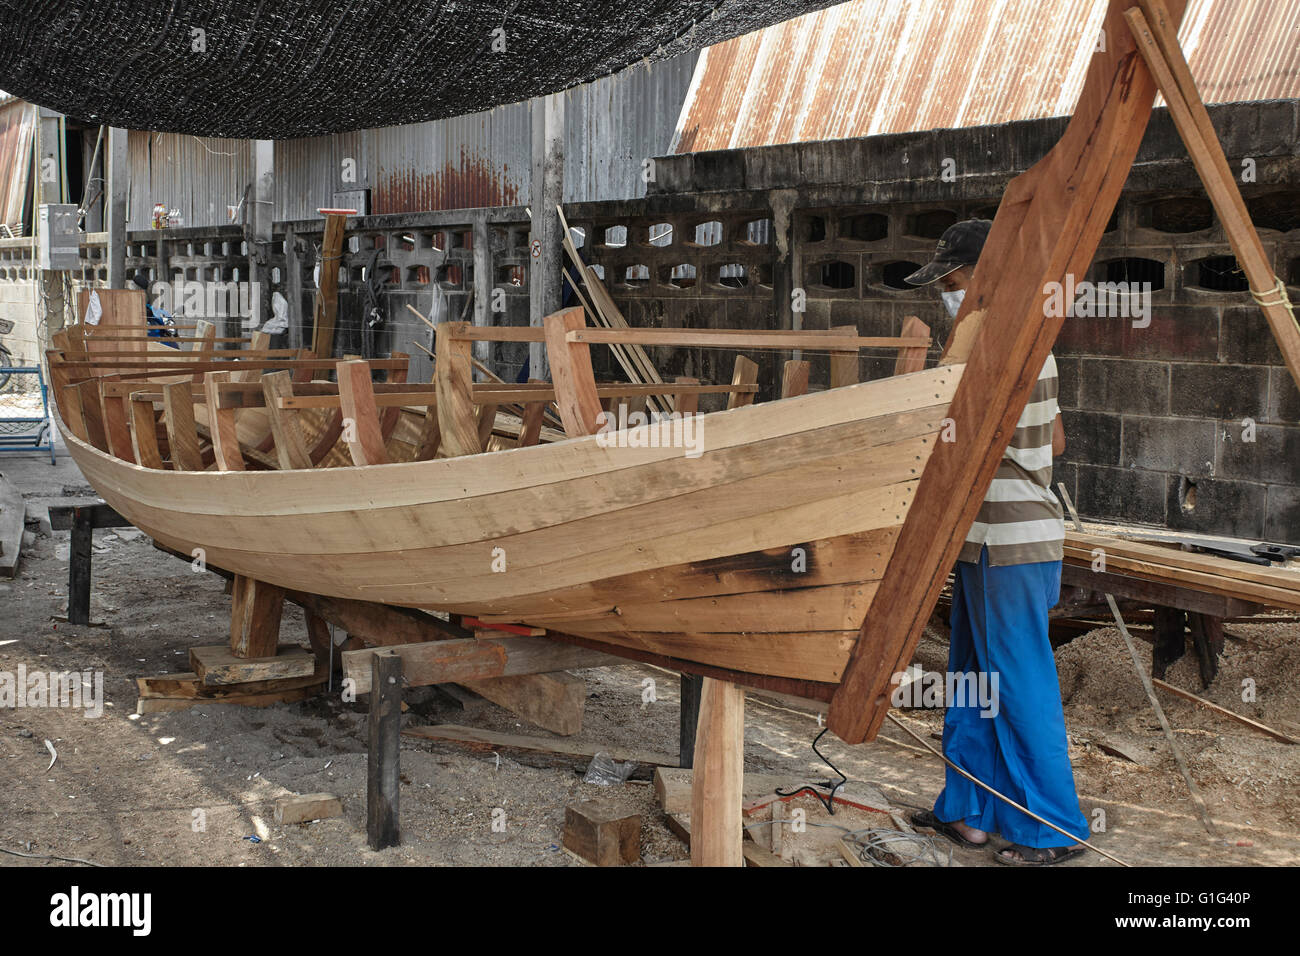 Constructor de barcos de Tailandia. La construcción artesanal de un barco  tradicional de madera. Tailandia S. E. Asia Fotografía de stock - Alamy